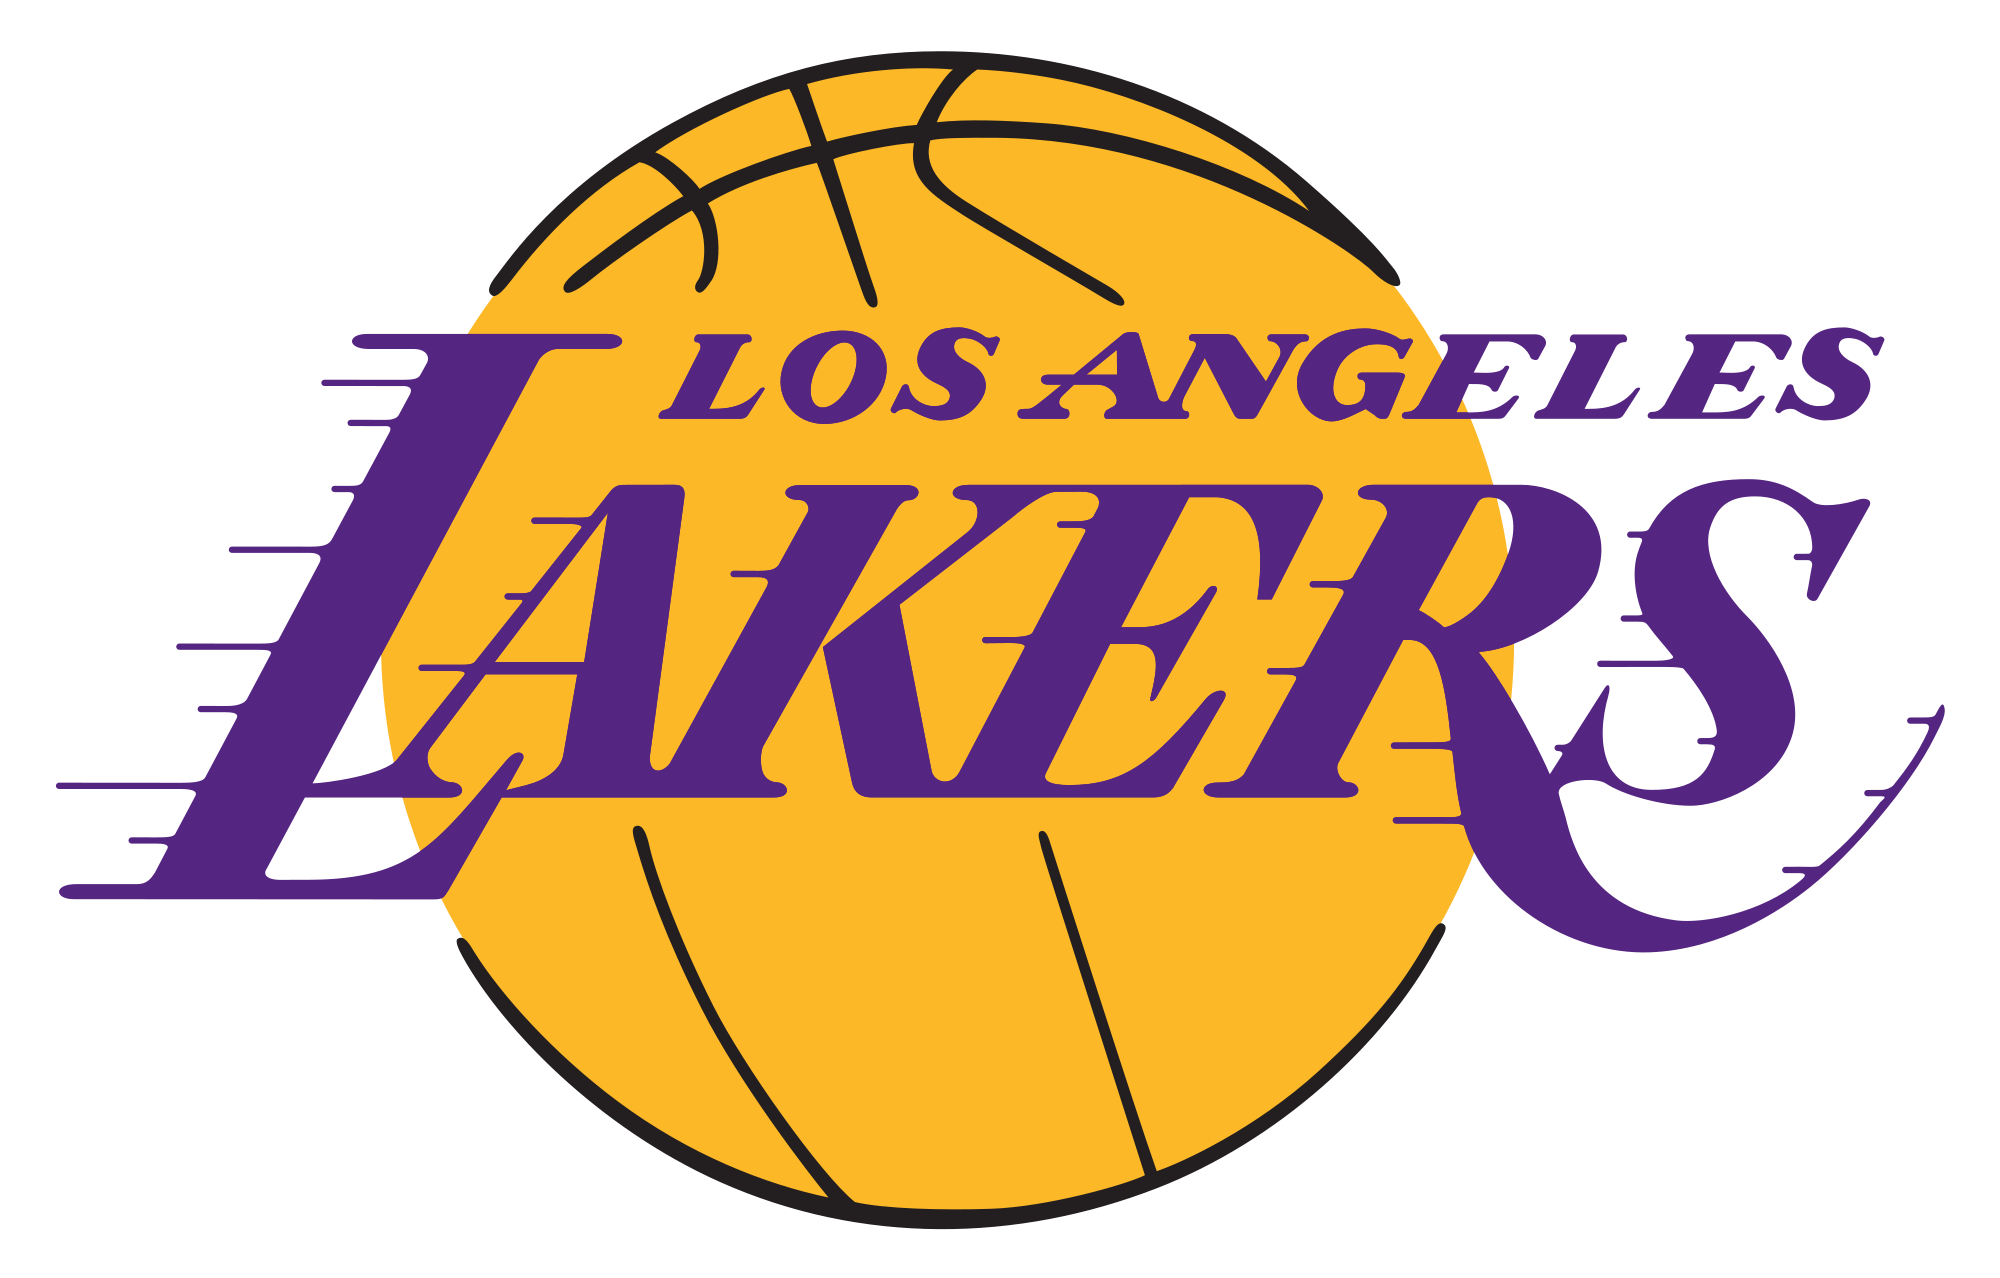 Los Angeles Lakers Logo Transparent Png - Pluspng, Los Angeles Lakers Logo PNG - Free PNG